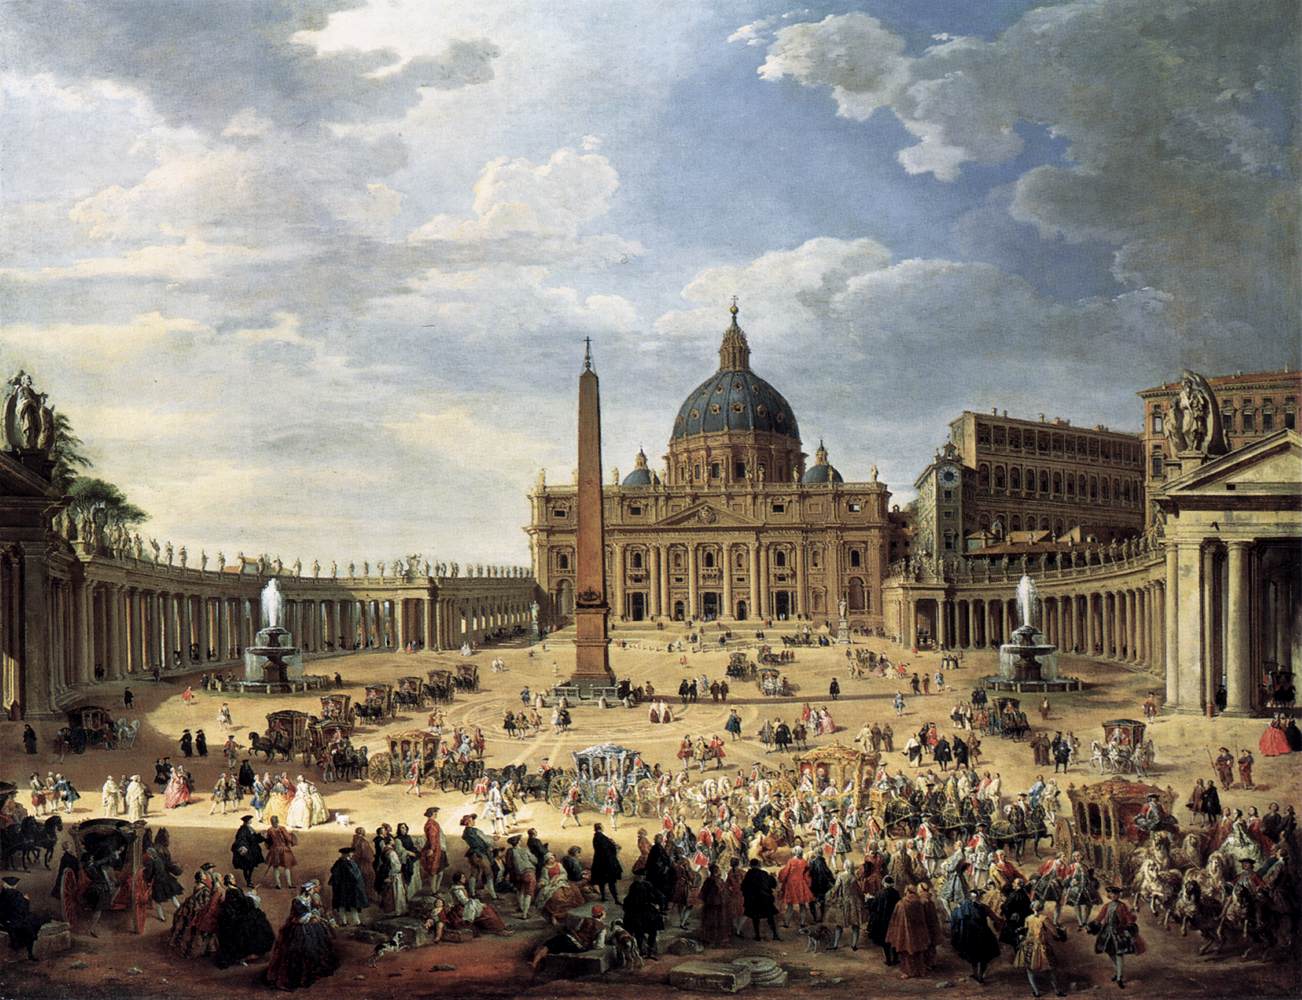 Departure of the Duc de Choiseul from La Piazza Di San Pietro